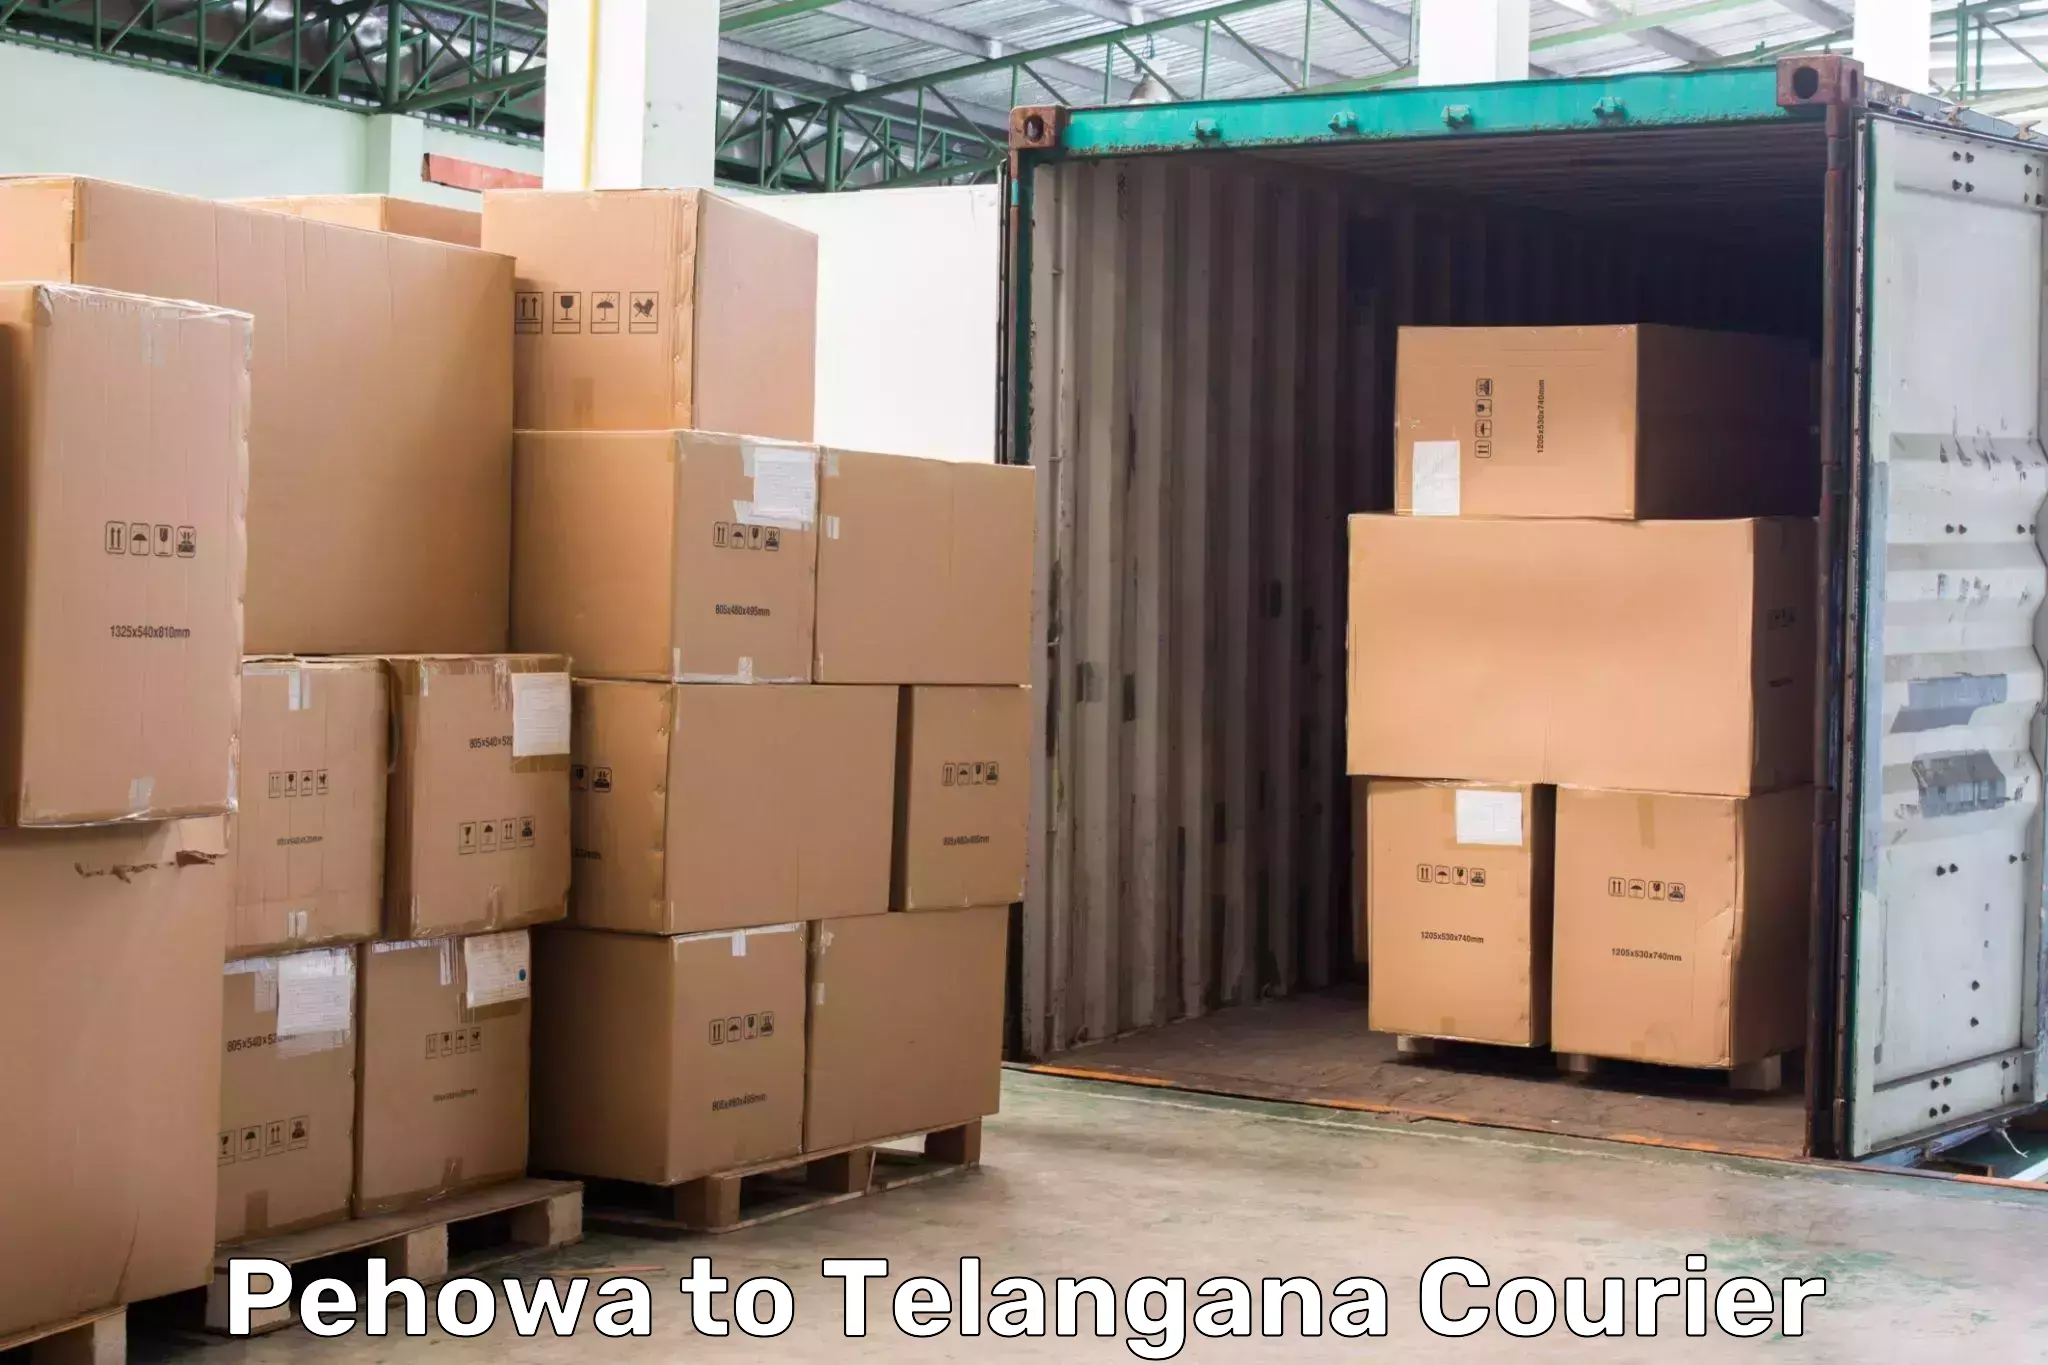 Express logistics in Pehowa to Madgulapally